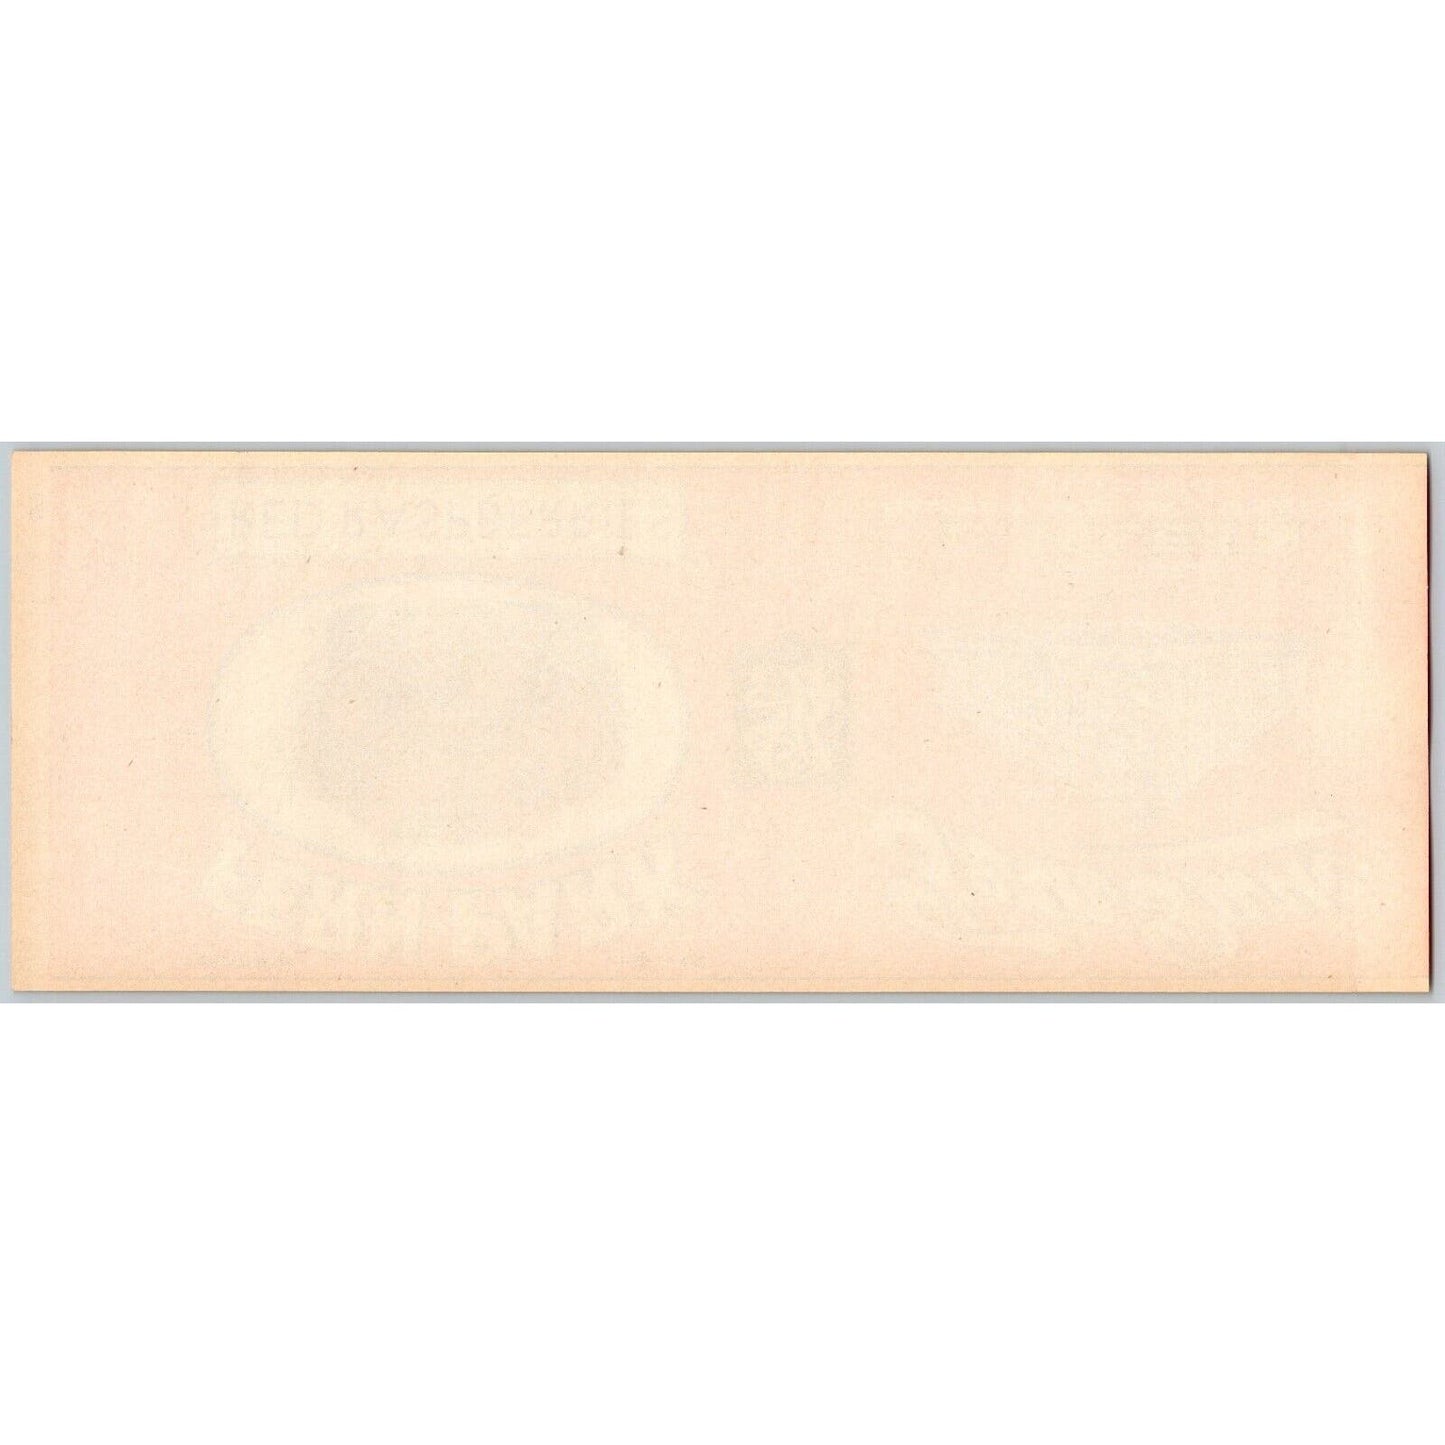 Fern Park Red Raspberries Paper Can Label L. Klein Chicago c1930's-40's VGC